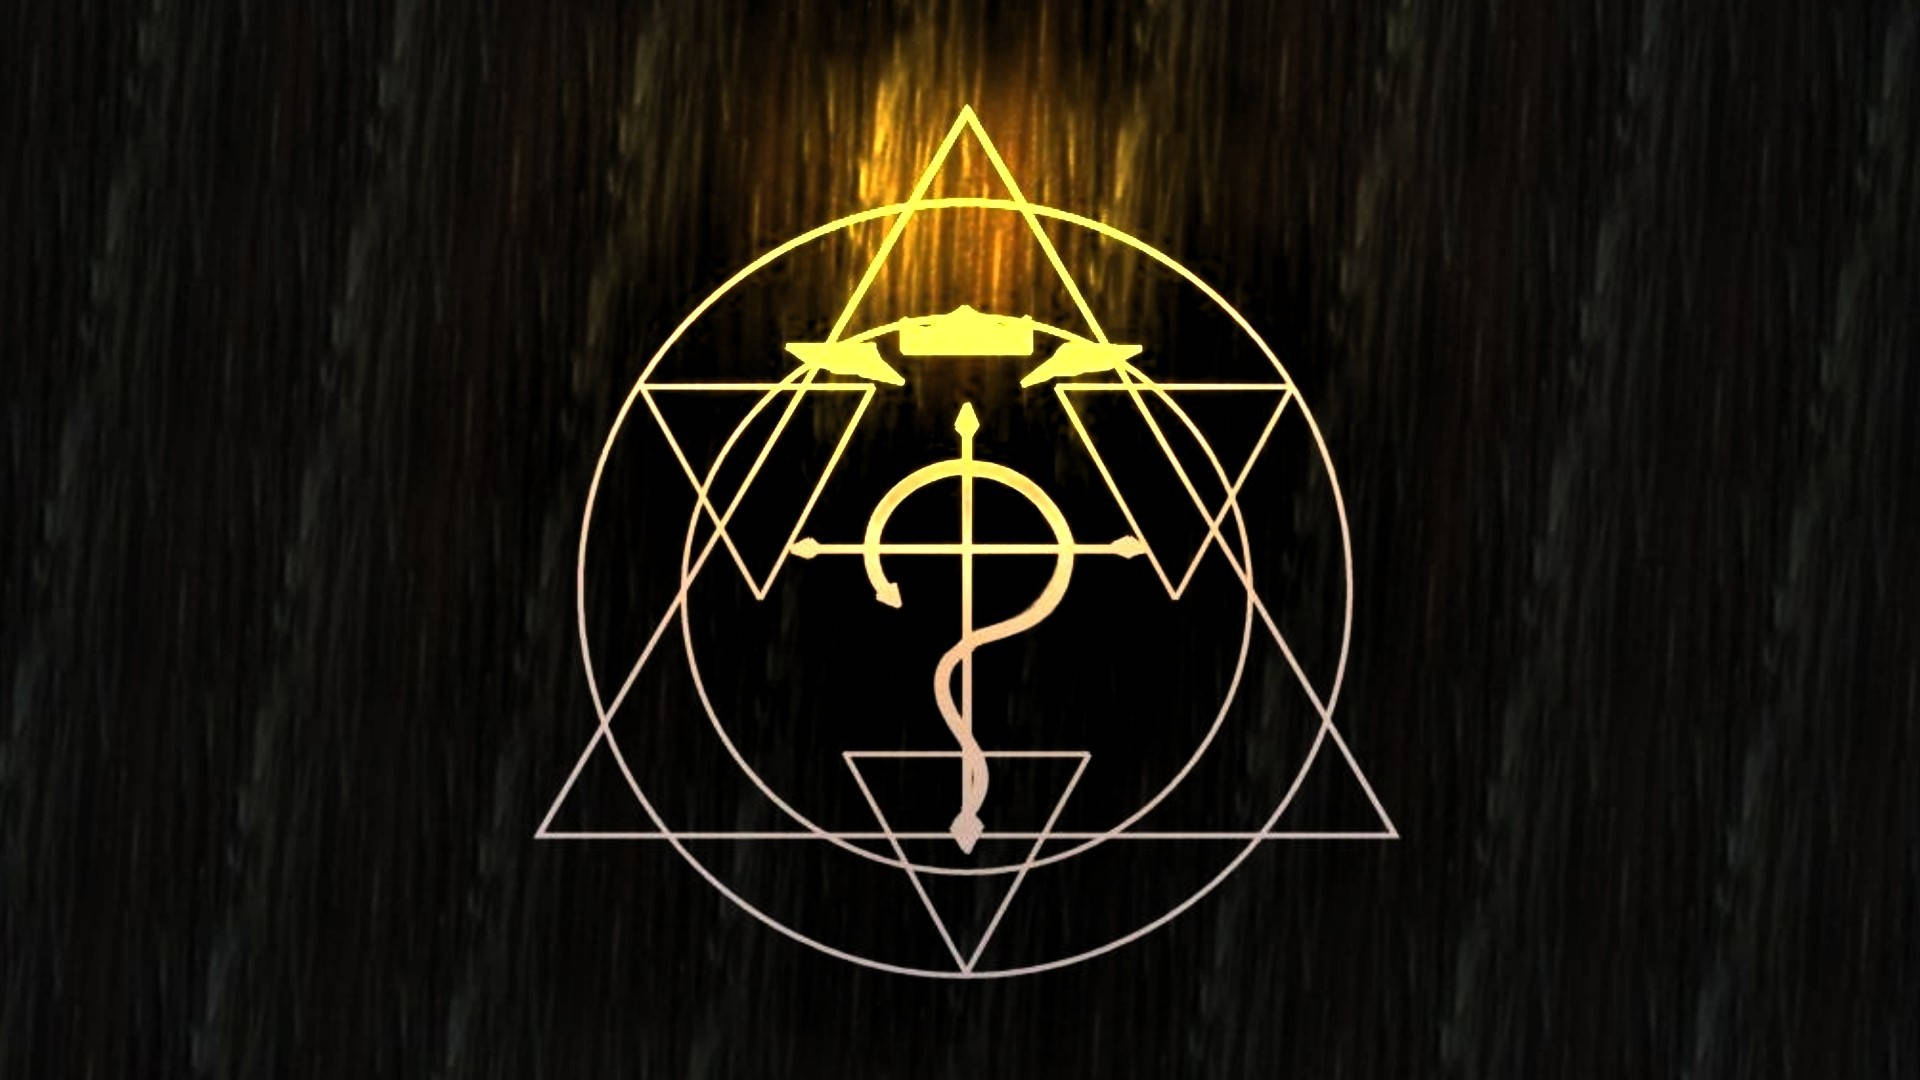 Top Anime Fullmetal Alchemist Symbol Background